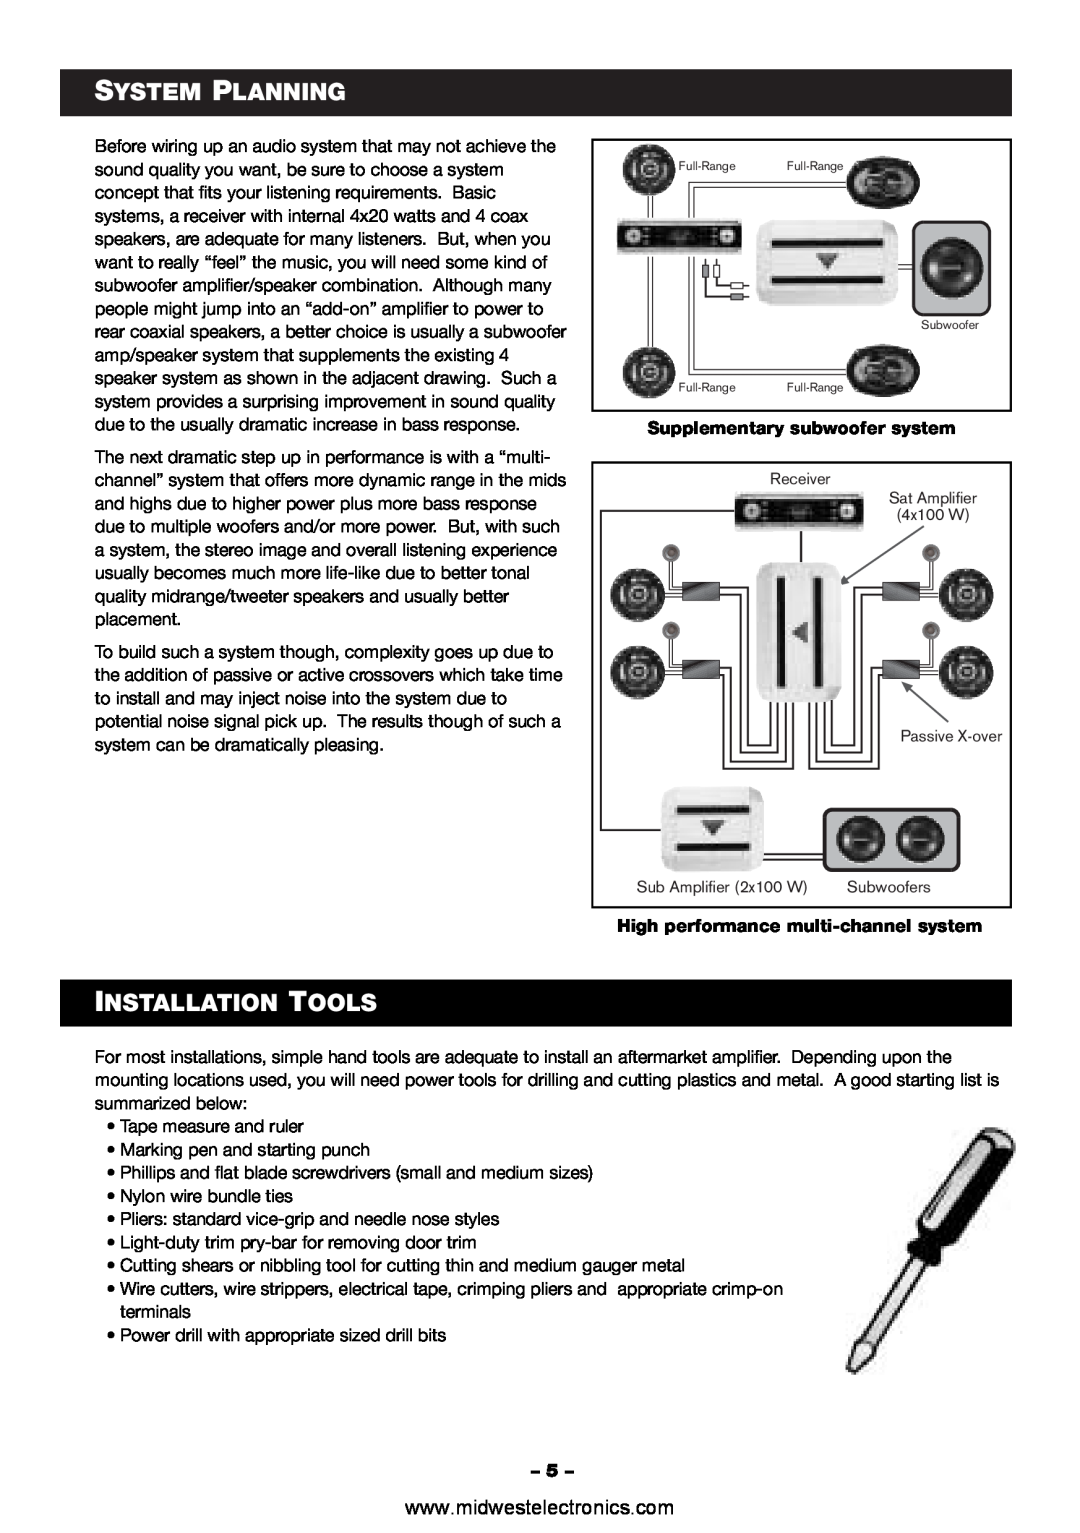 Blaupunkt VA4100 System Planning, Installation Tools, Supplementary subwoofer system, High performance multi-channelsystem 